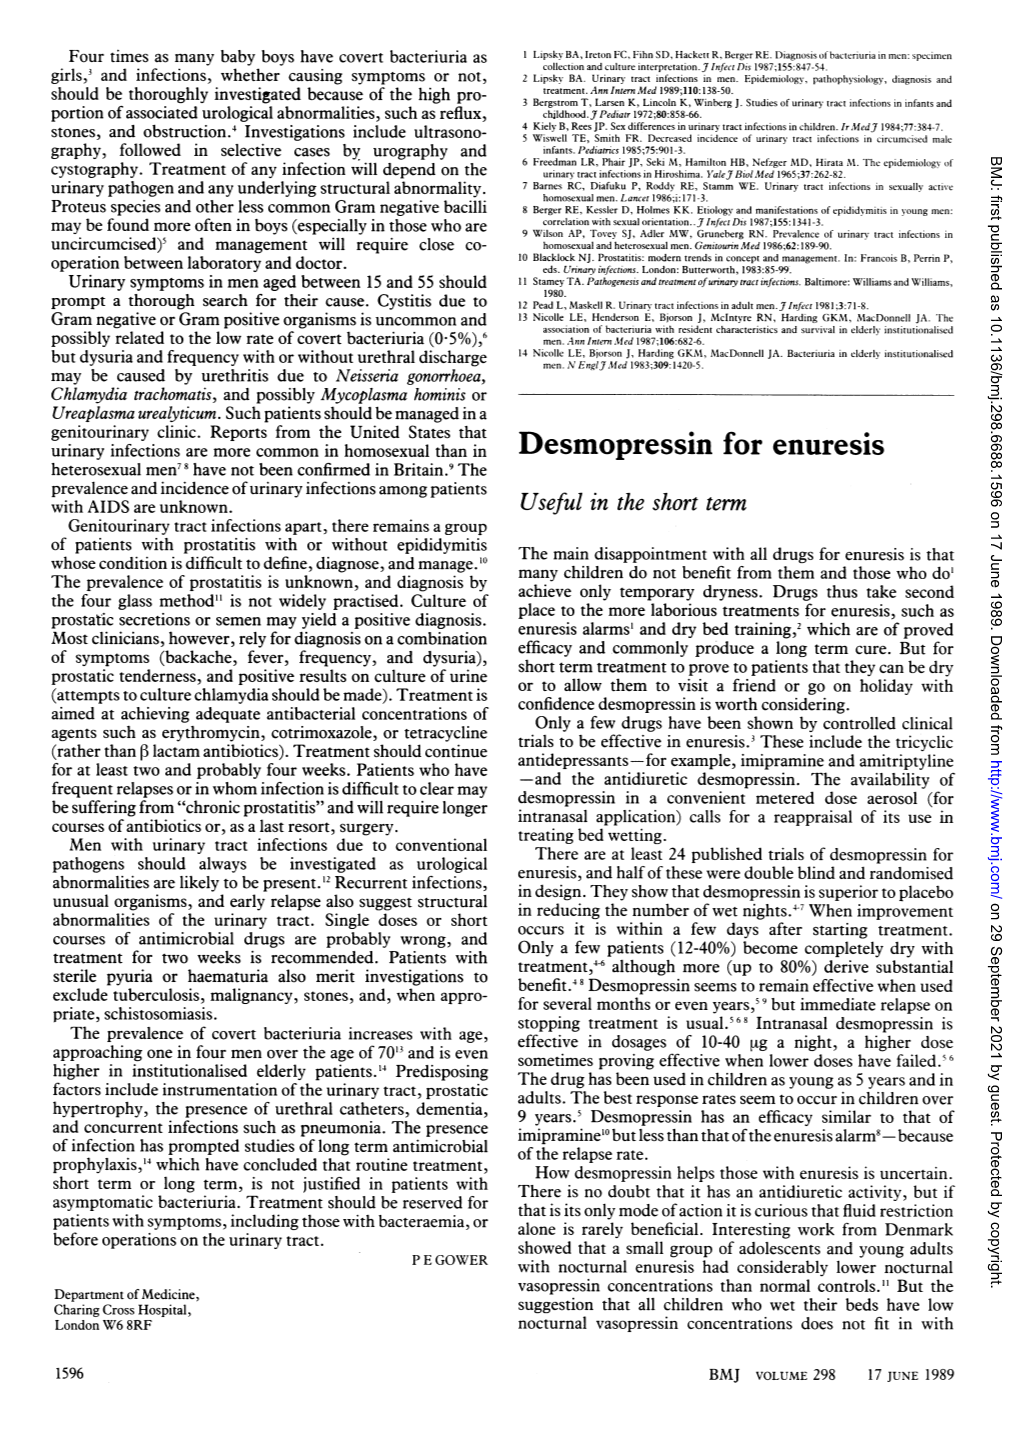 Desmopressin for Enuresis